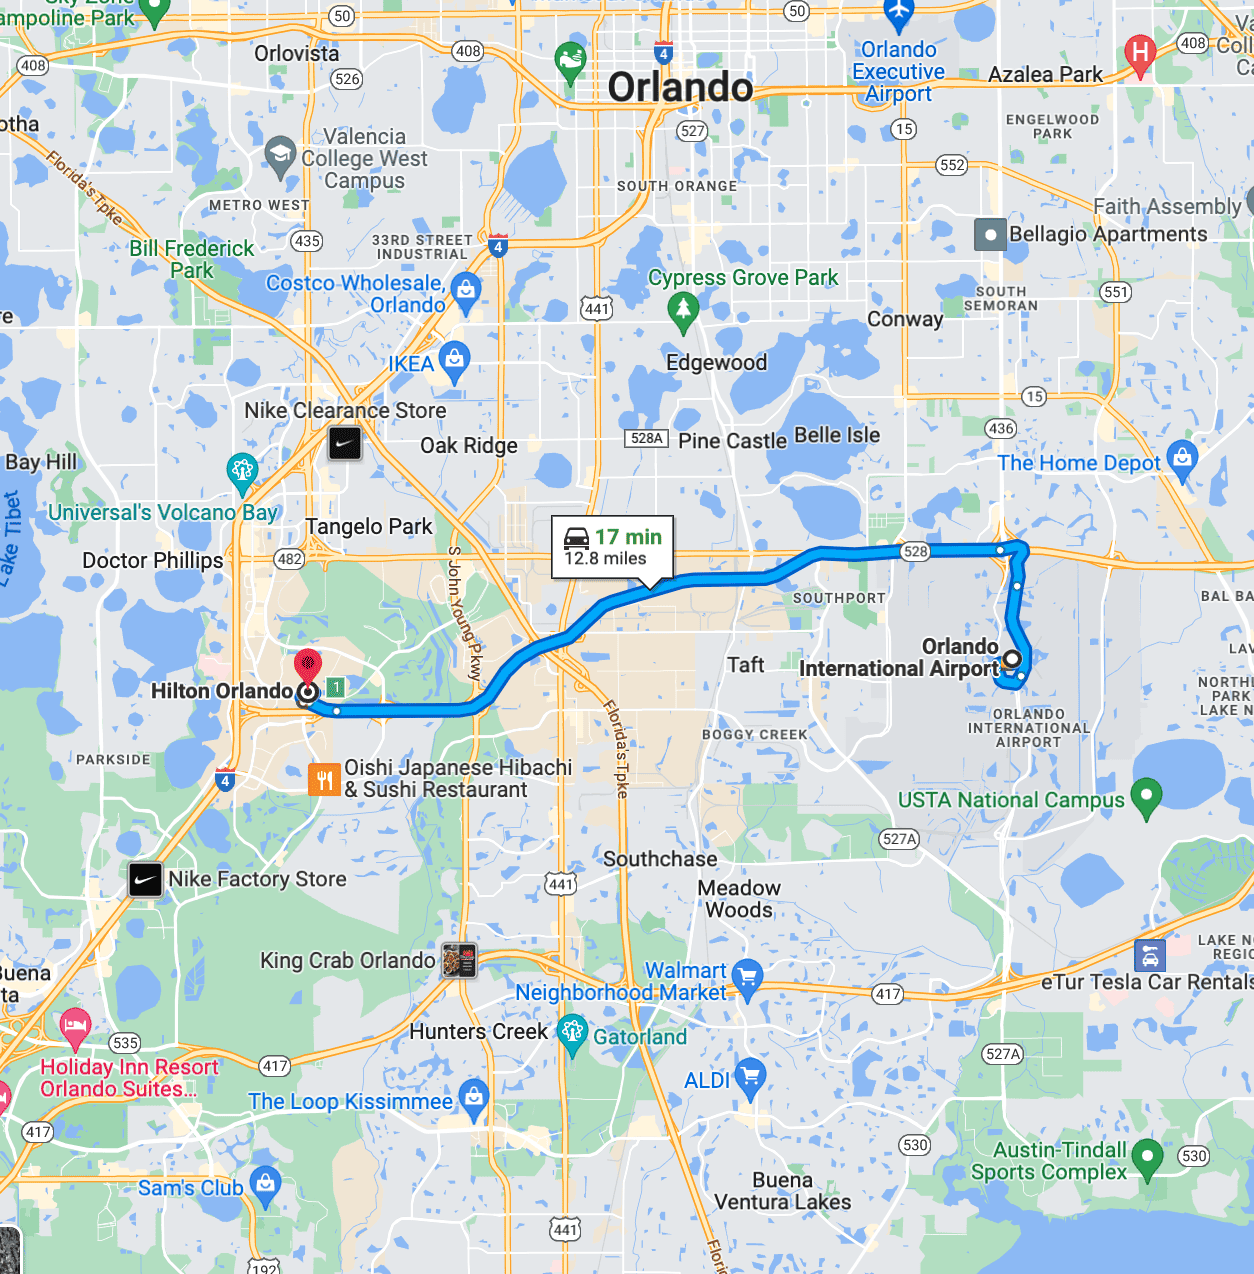 Google Maps Hilton Orlando Hotel distance to MCO Airport